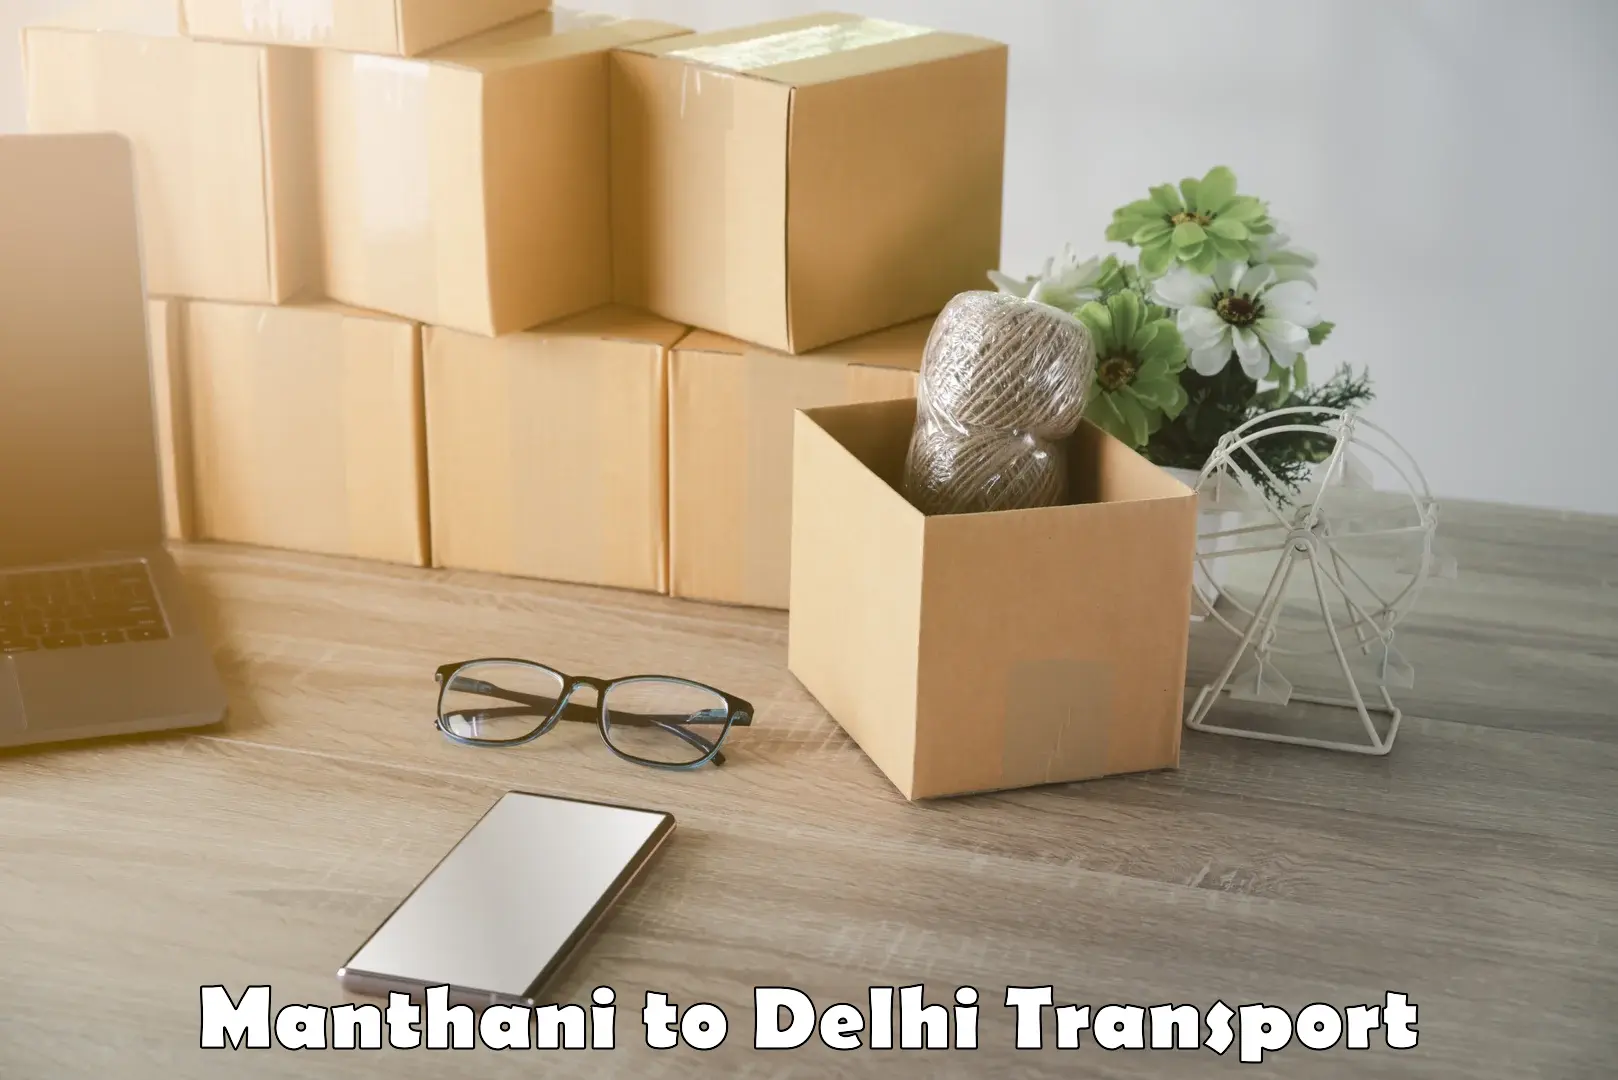 Lorry transport service Manthani to Delhi